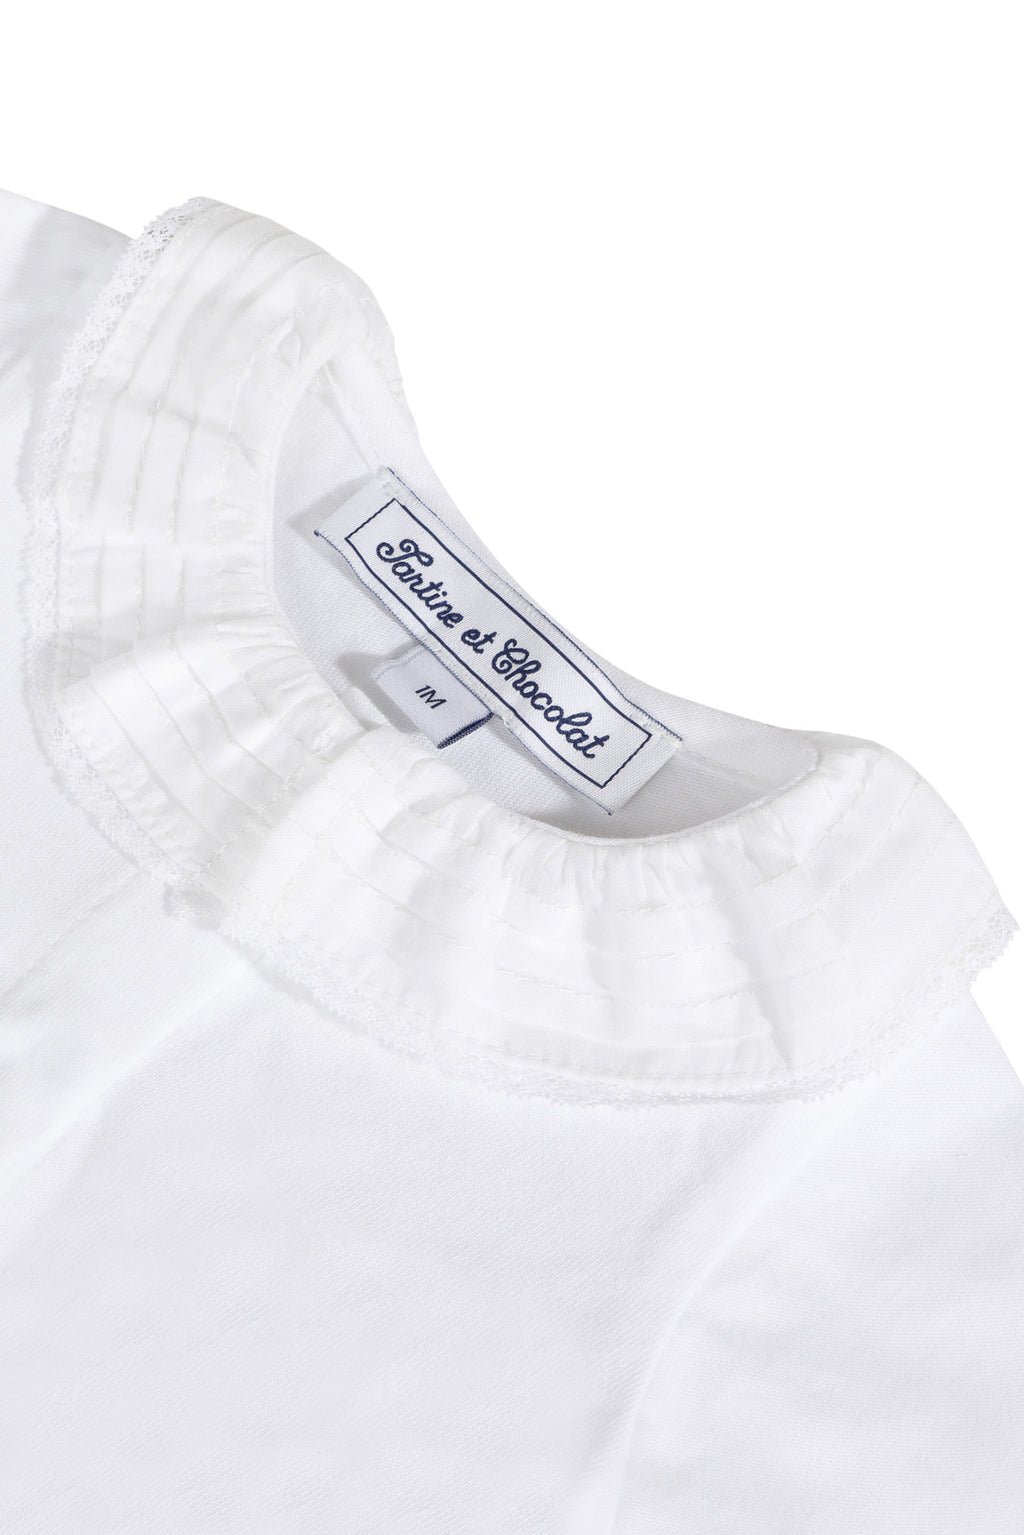 Body - White Collar English embroidery